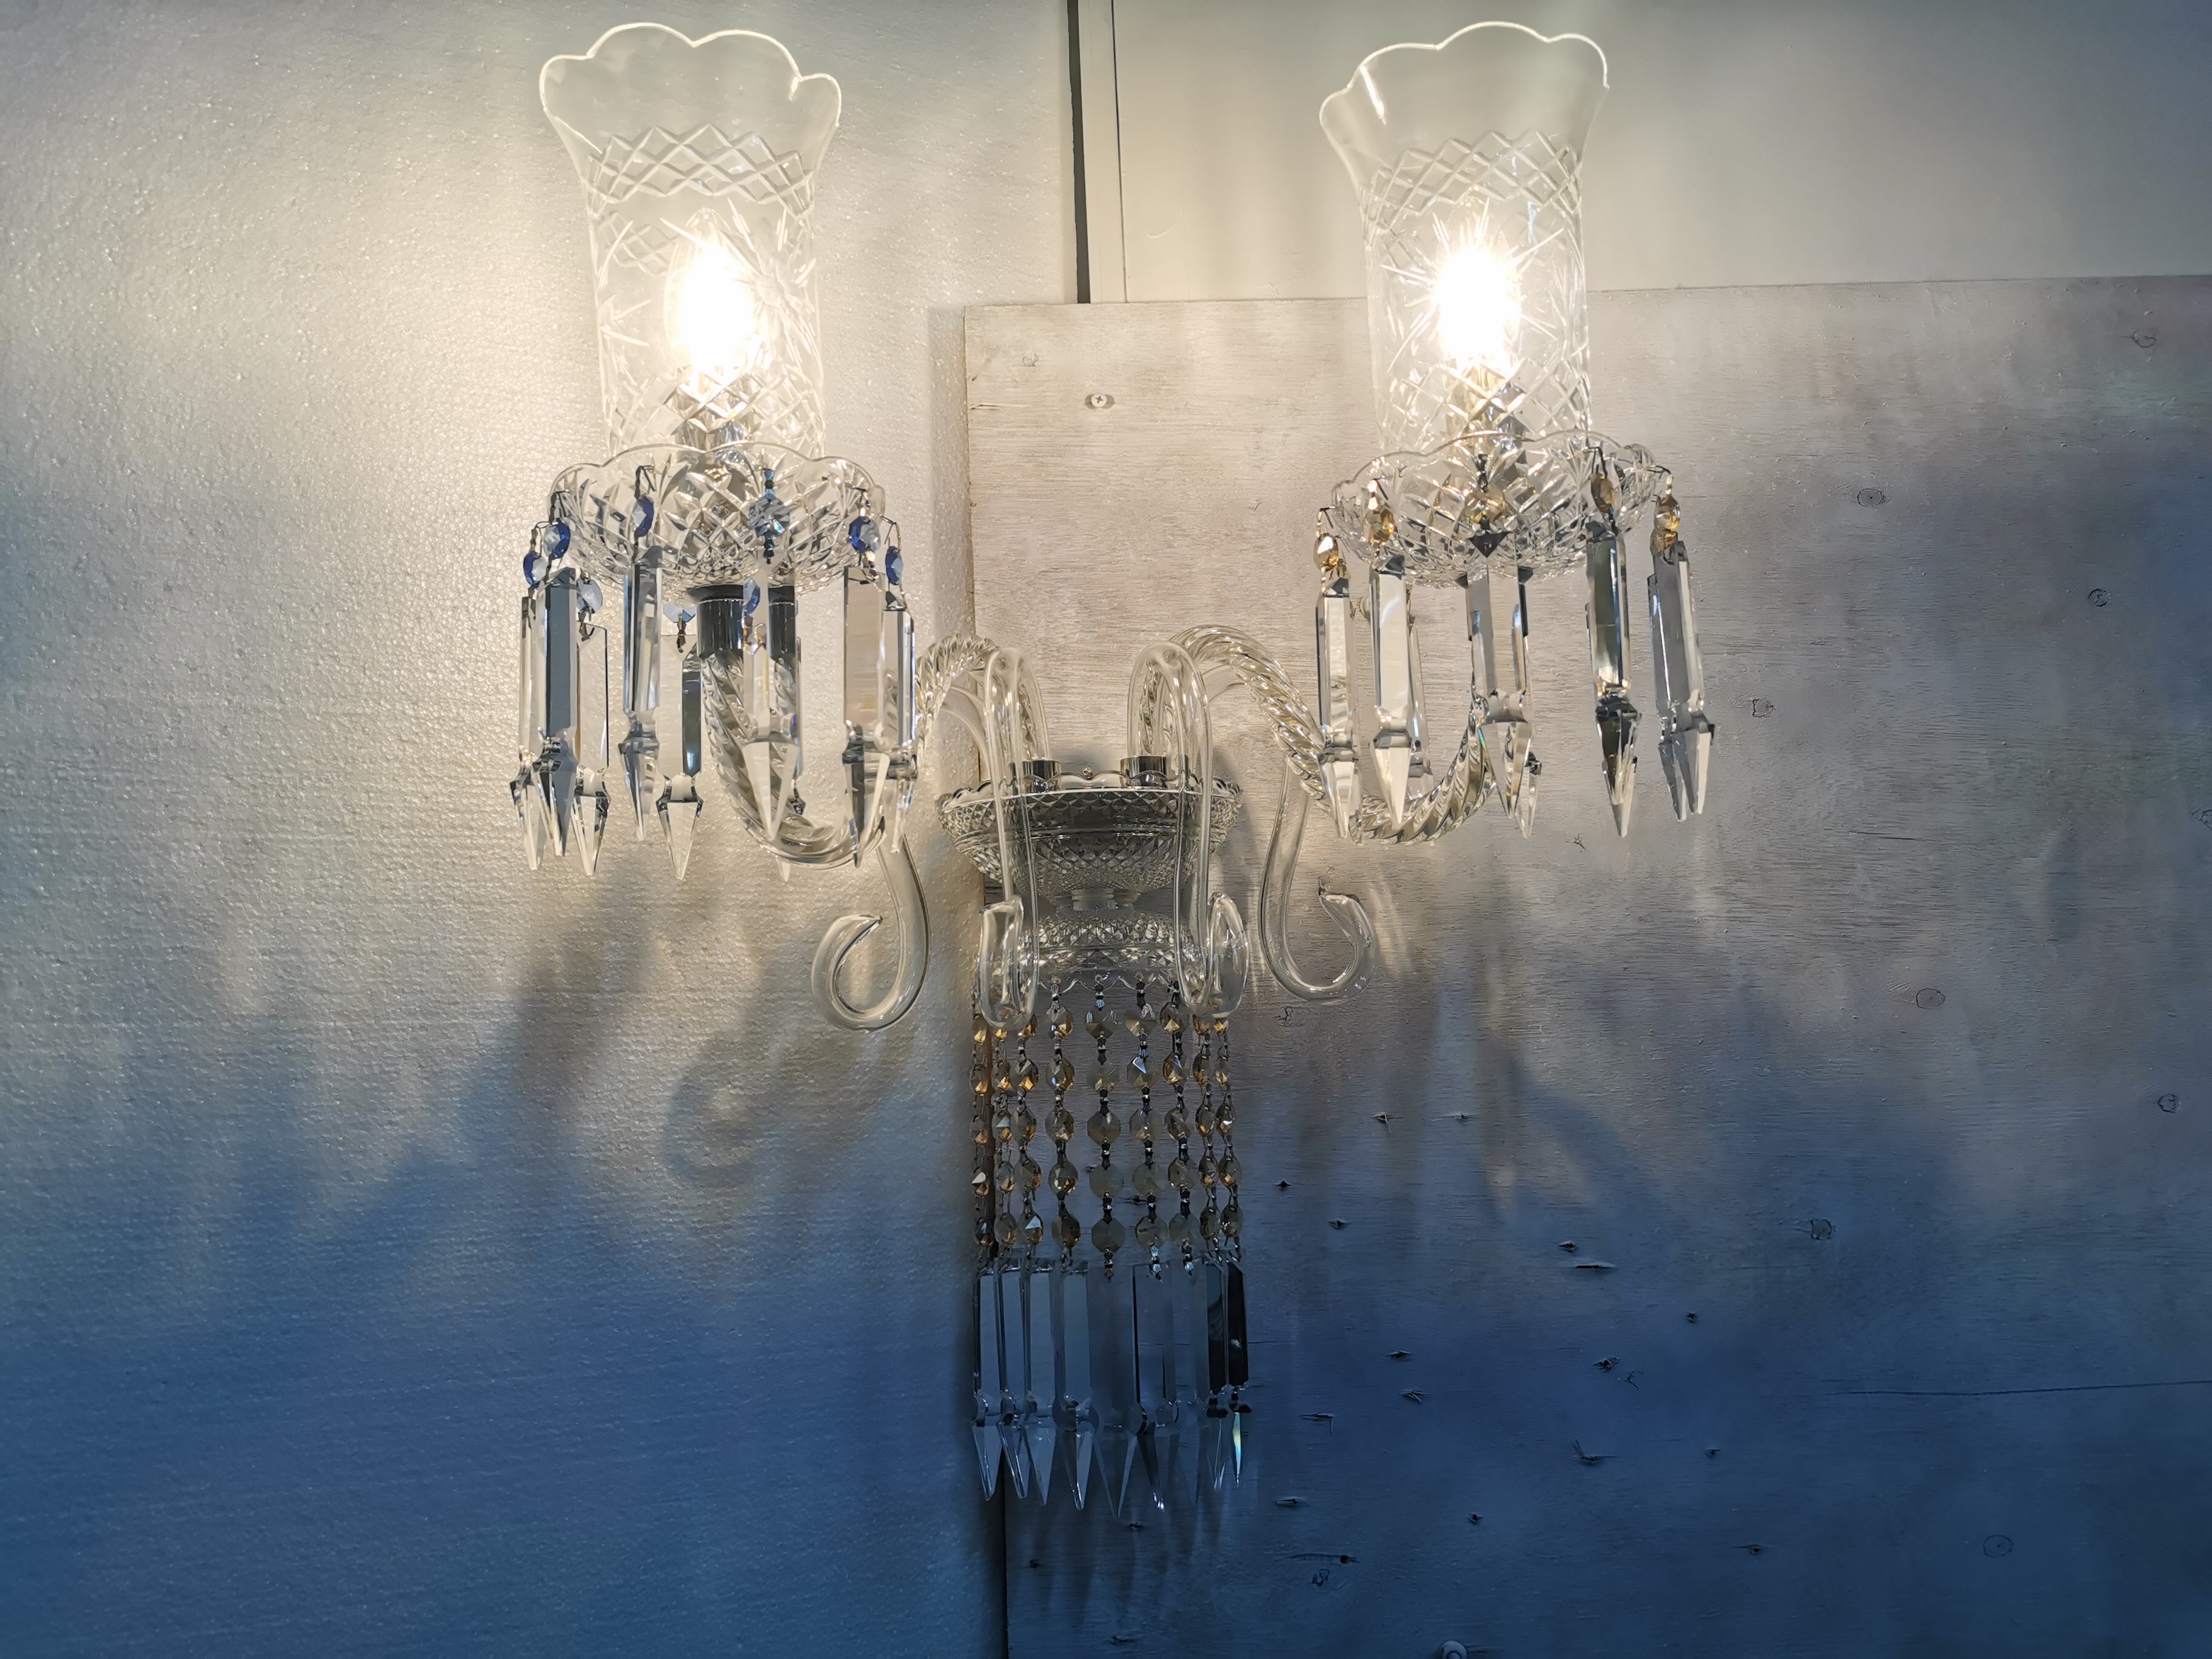 Villa Design French Decorative Crystal Wall Light (KAME02)